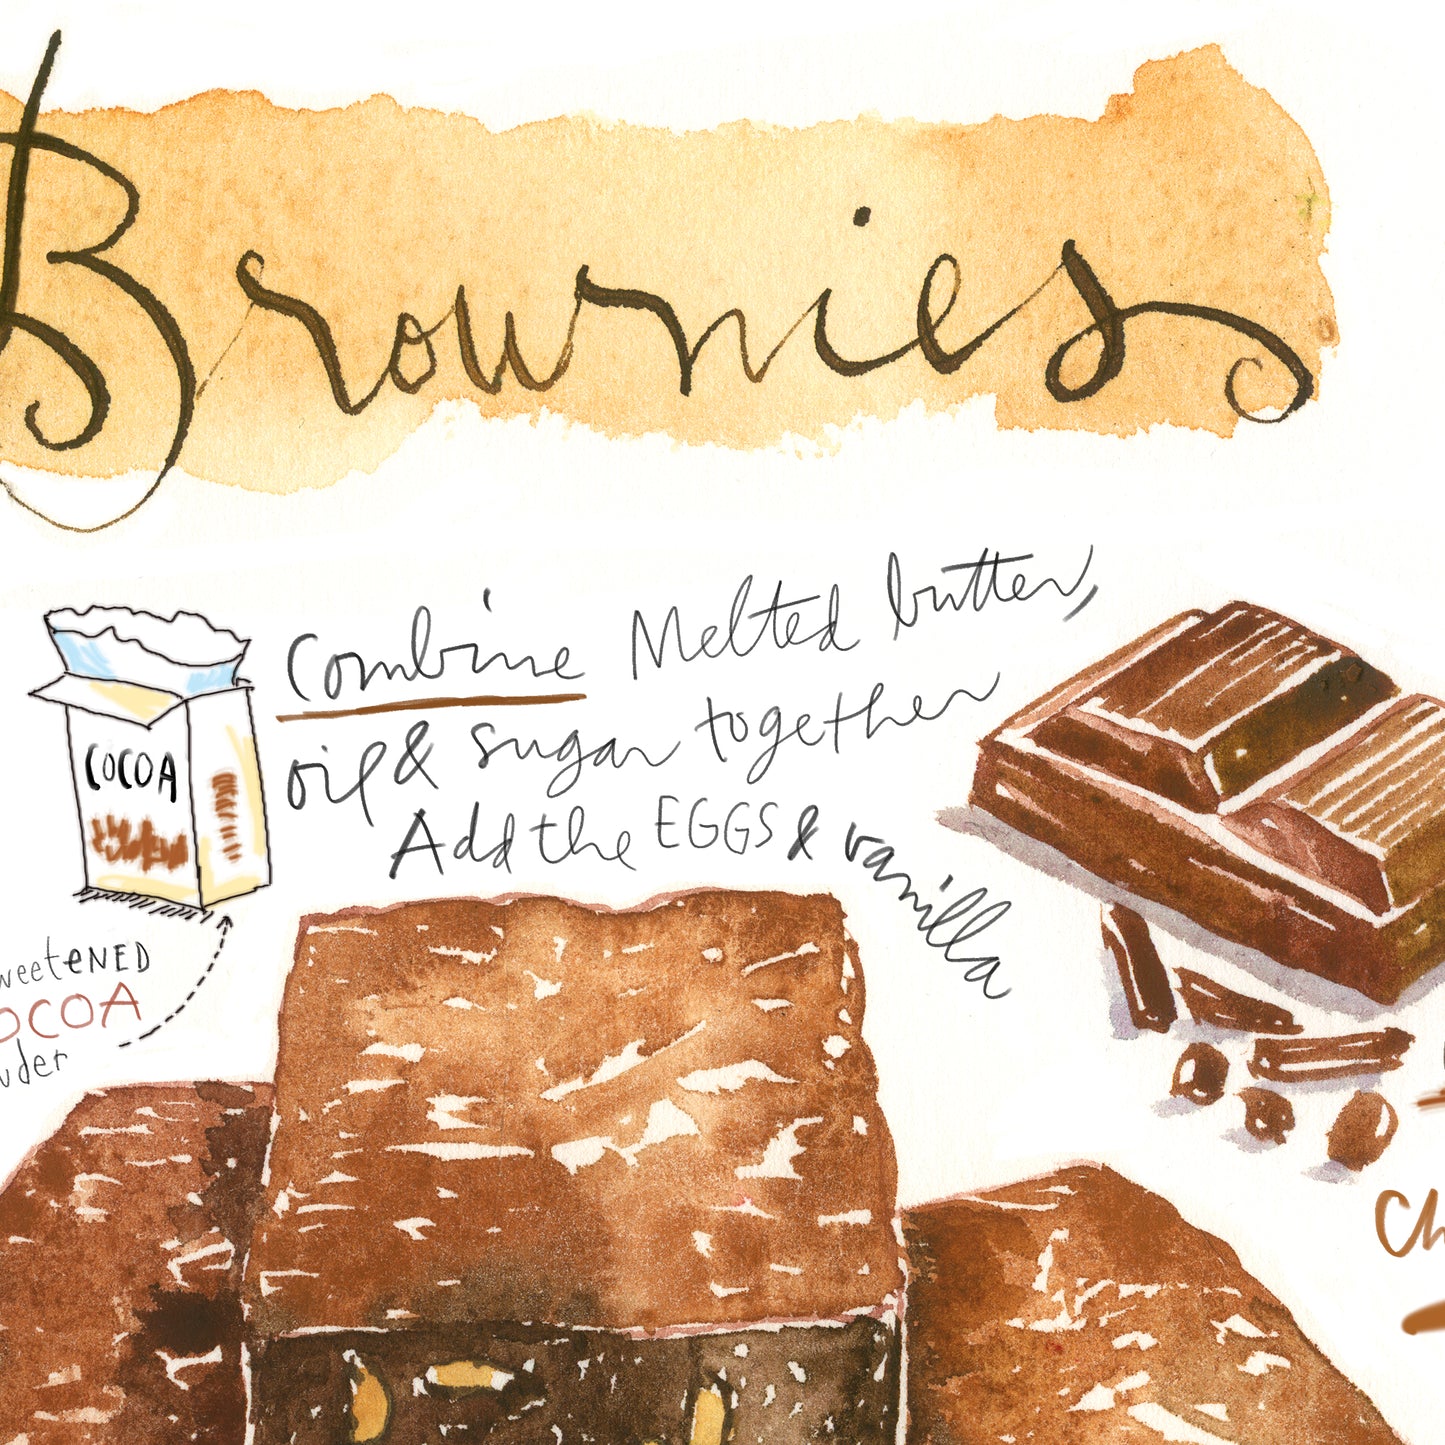 Brownie recipe